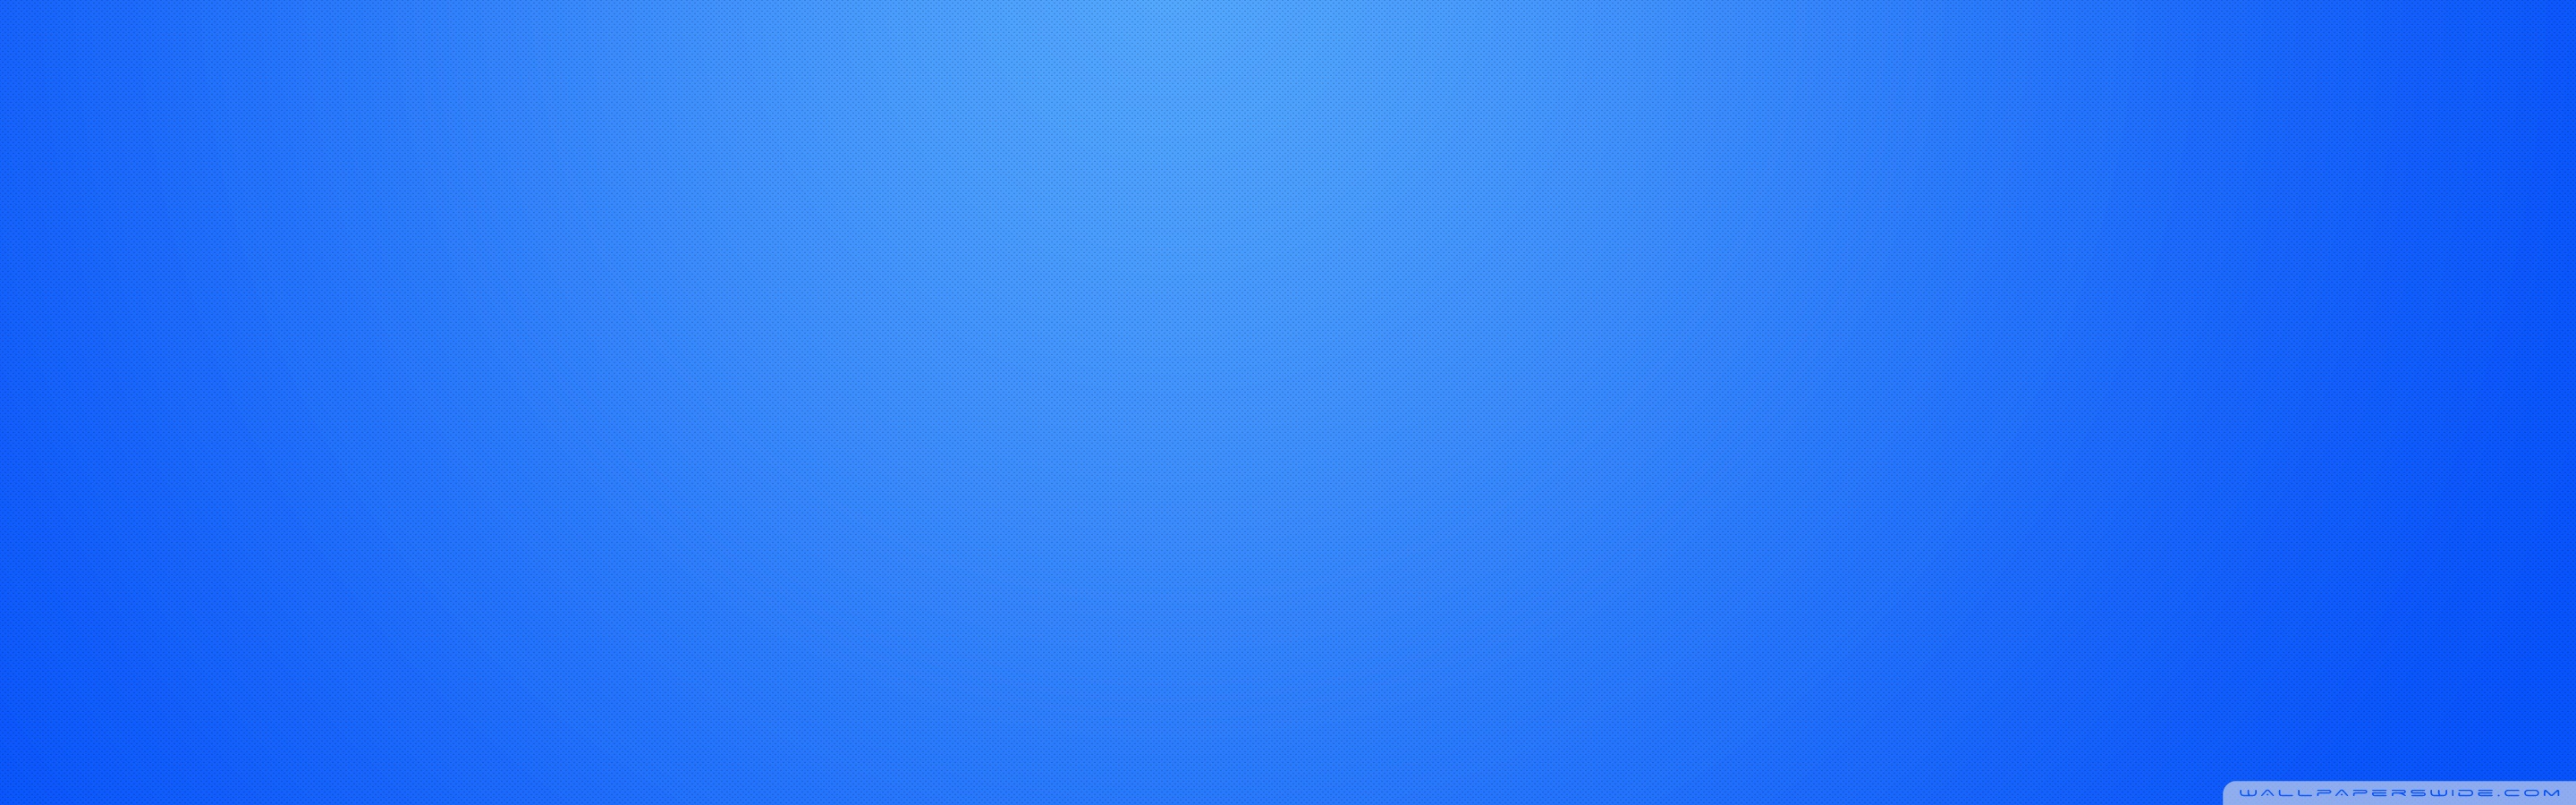 Blue Simple Dots Texture Pattern Background Ultra HD Desktop Background